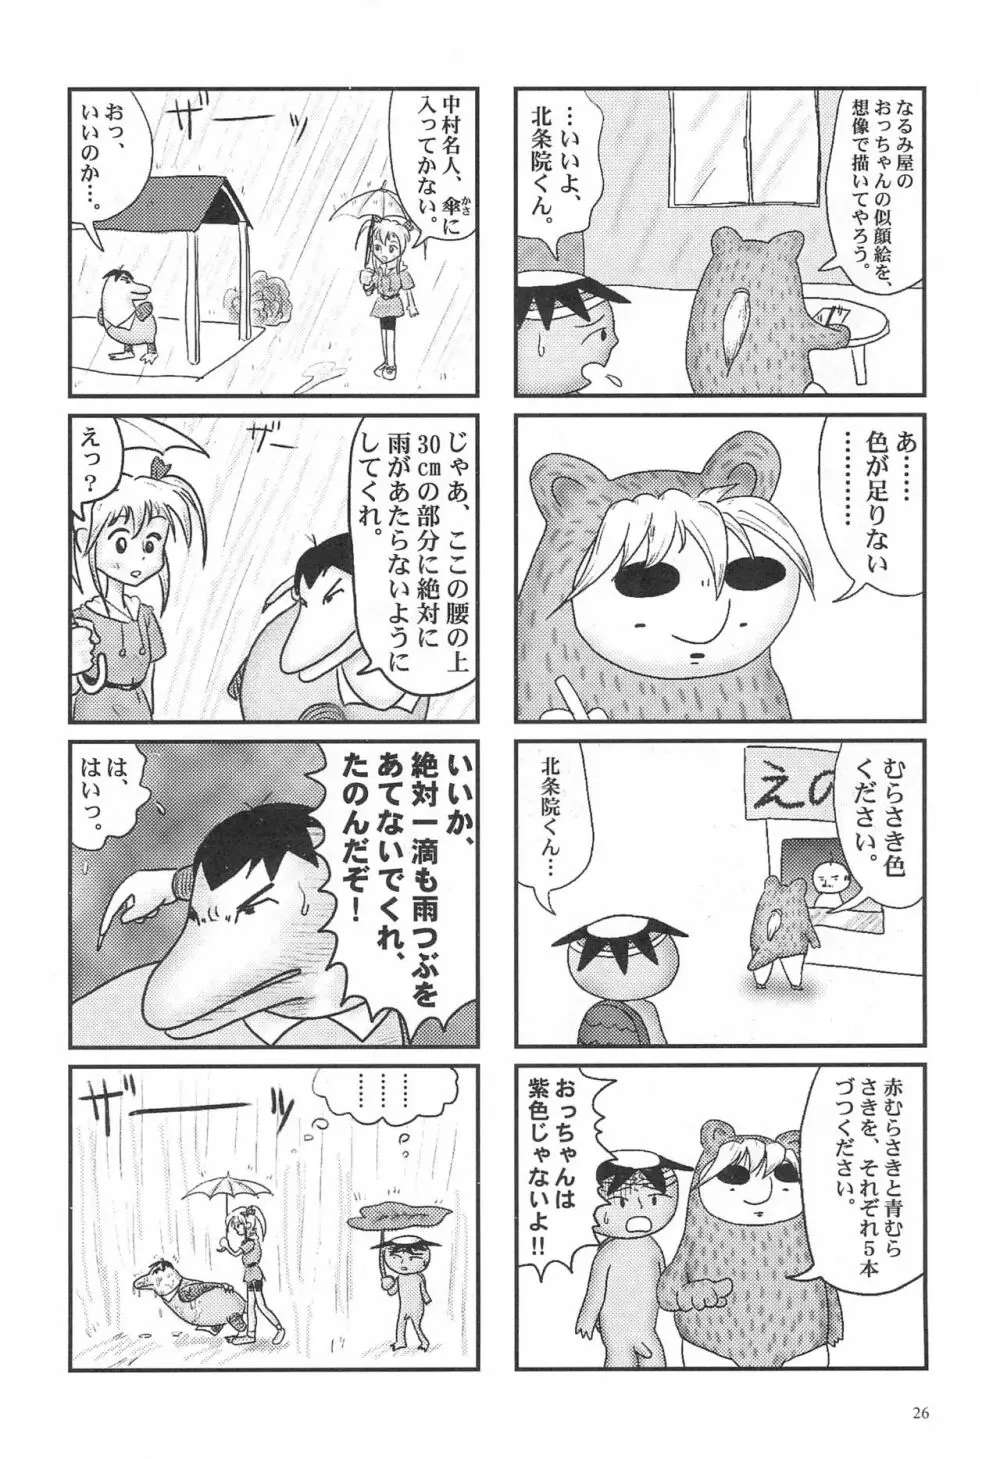 閃虹丸作品集 Vol.1 26ページ